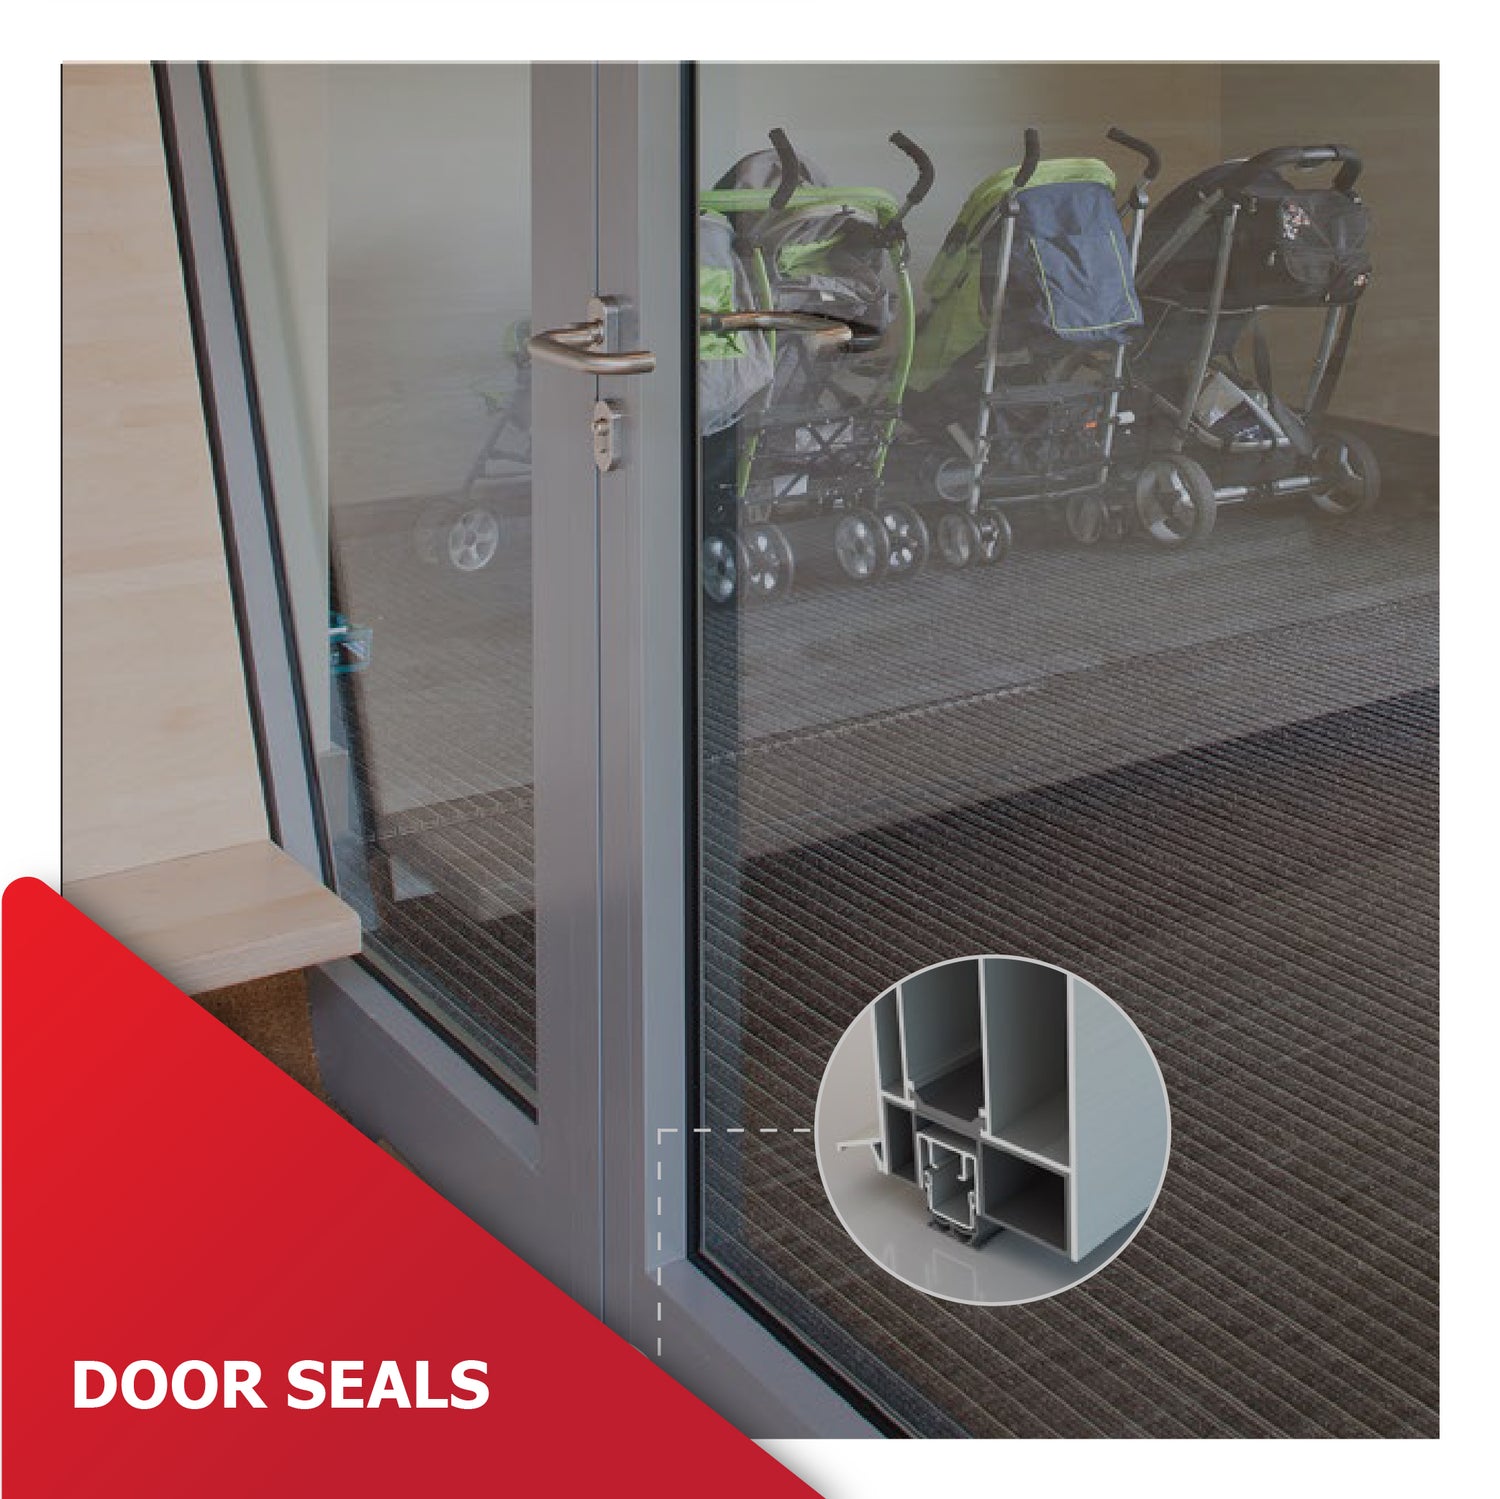 Premium Door Seals - Improve energy efficiency and eliminate drafts. Shop now at M. M. Noorbhoy & Co.